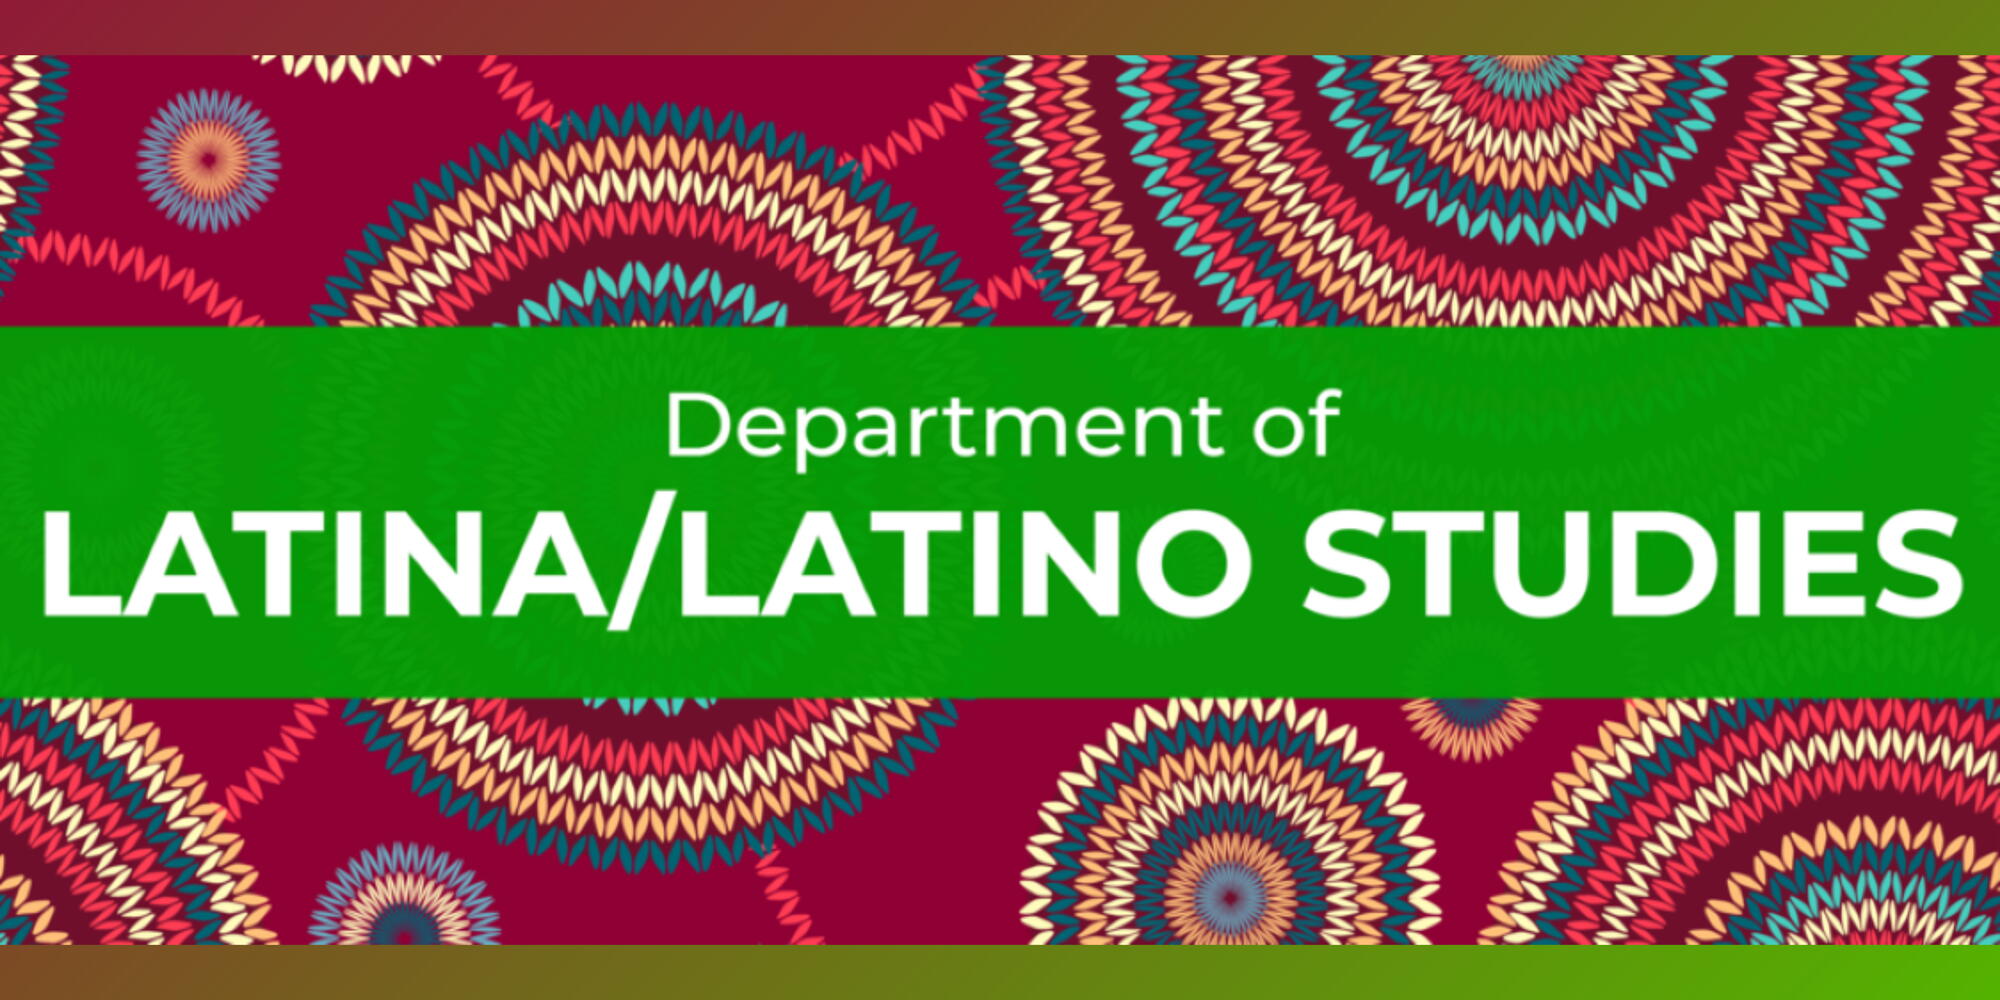 Department of Latina/Latino Studies Banner